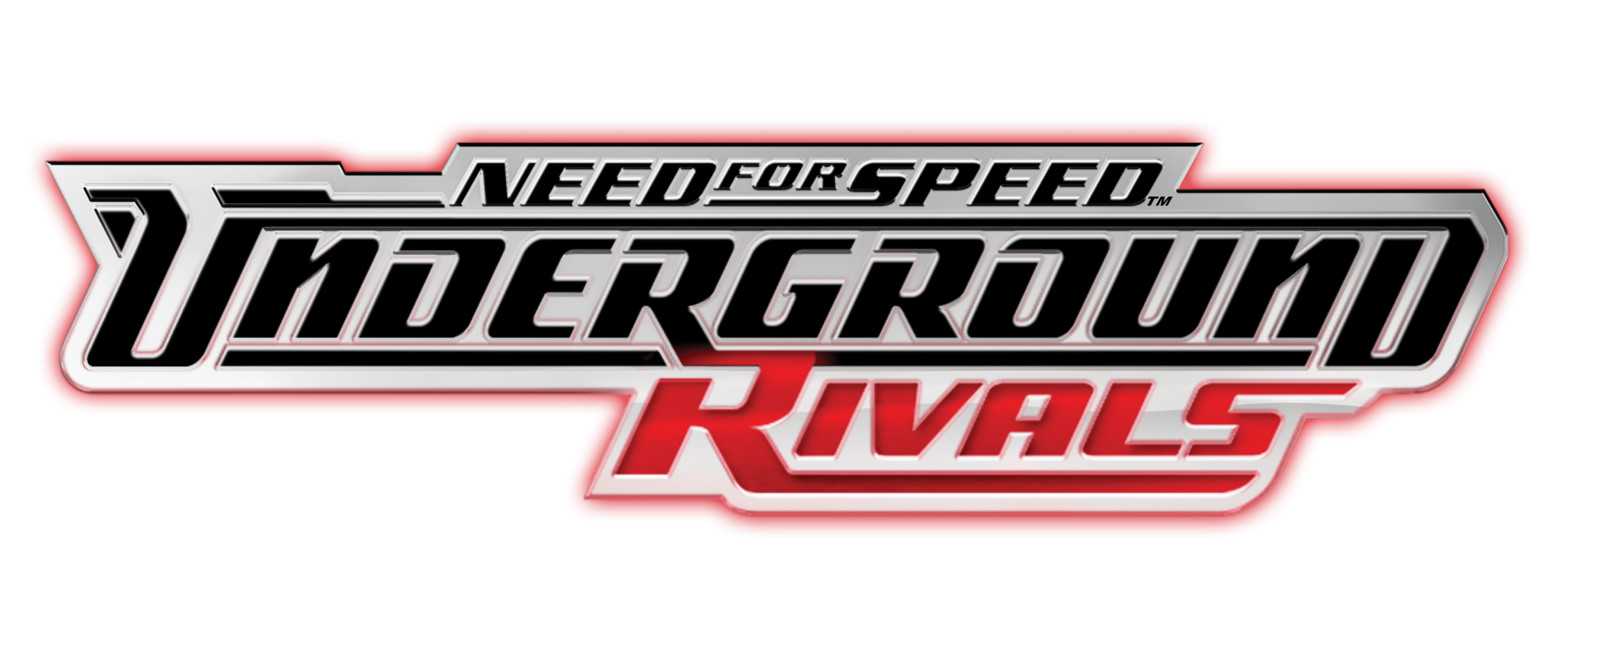 Need for Speed: Underground Rivals - Logotype (Original)